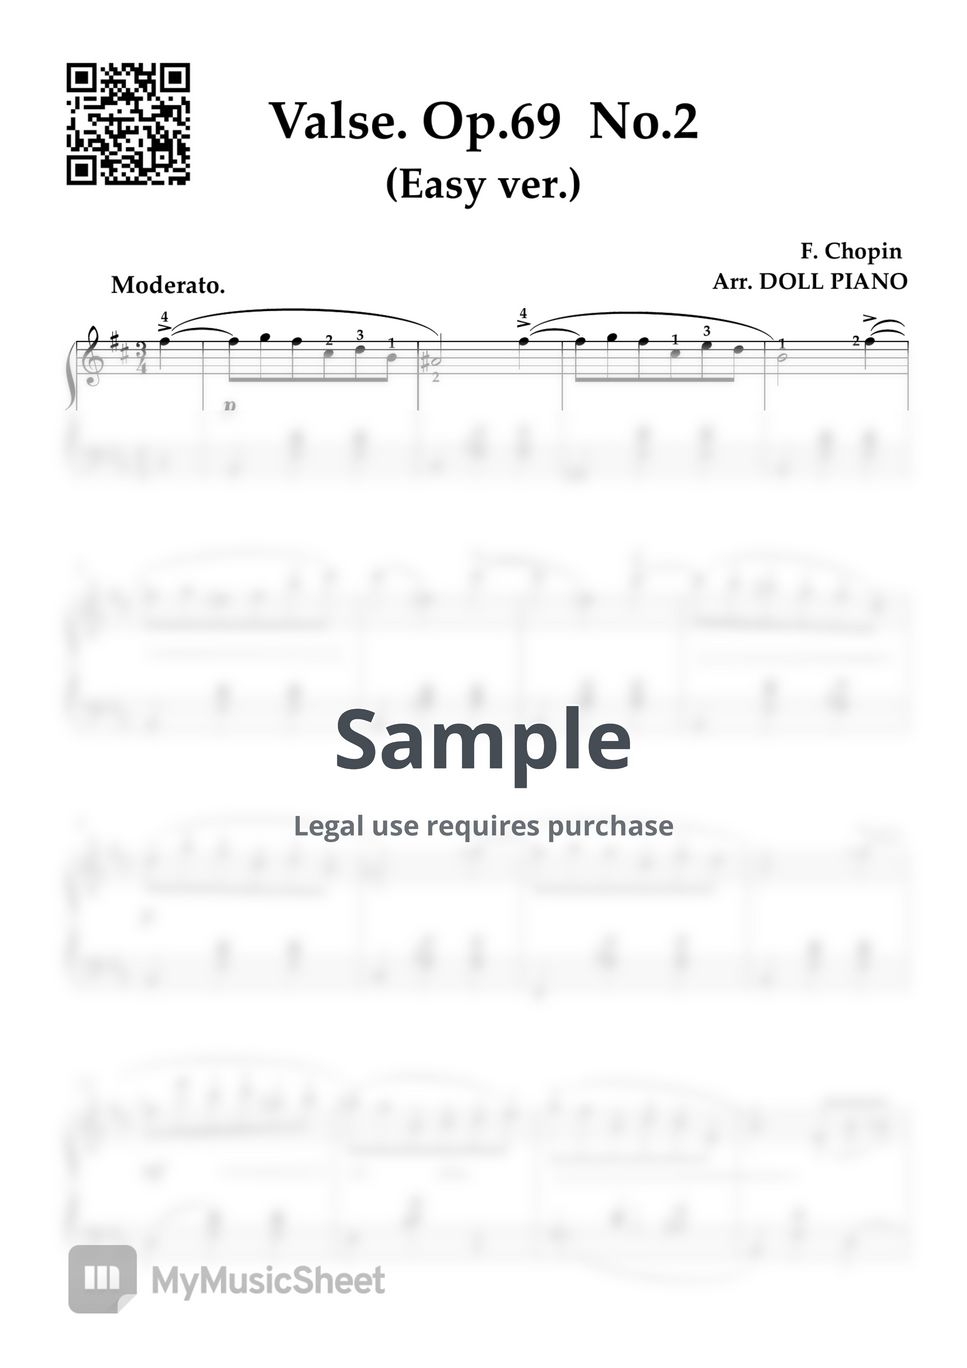 F. Chopin - Chopin Waltz Op.69 No.2 (Easy ver. a minor, b minor) by DOLL PIANO